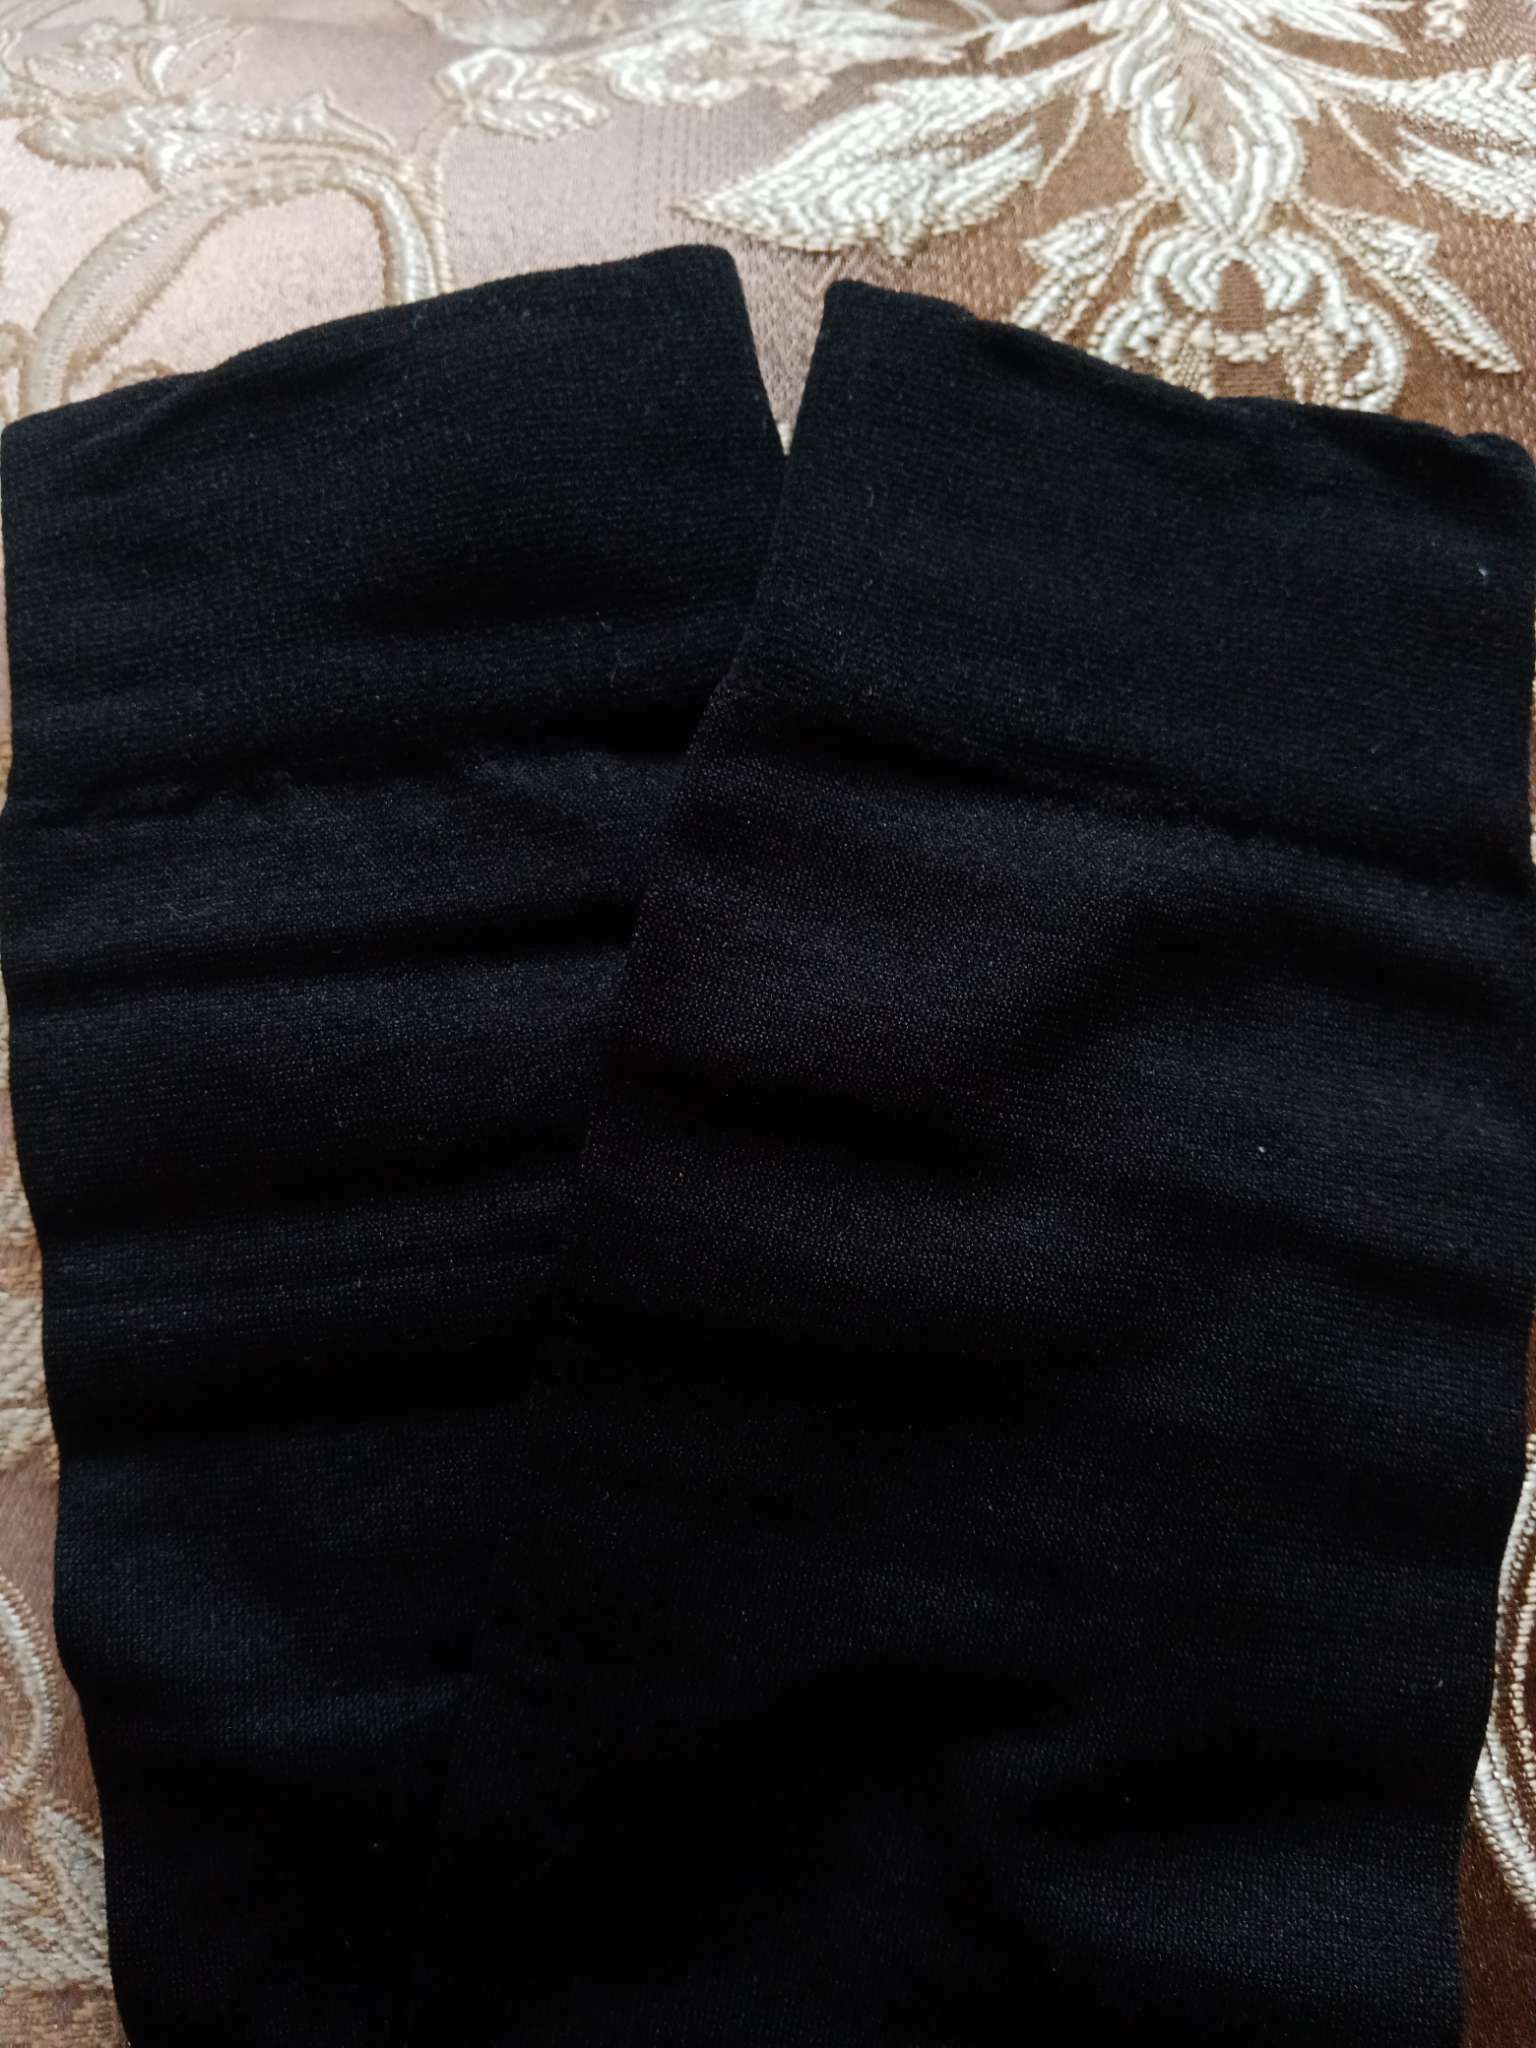 Фотография покупателя товара Леггинсы INNAMORE Calipso, цвет чёрный (nero), размер 4